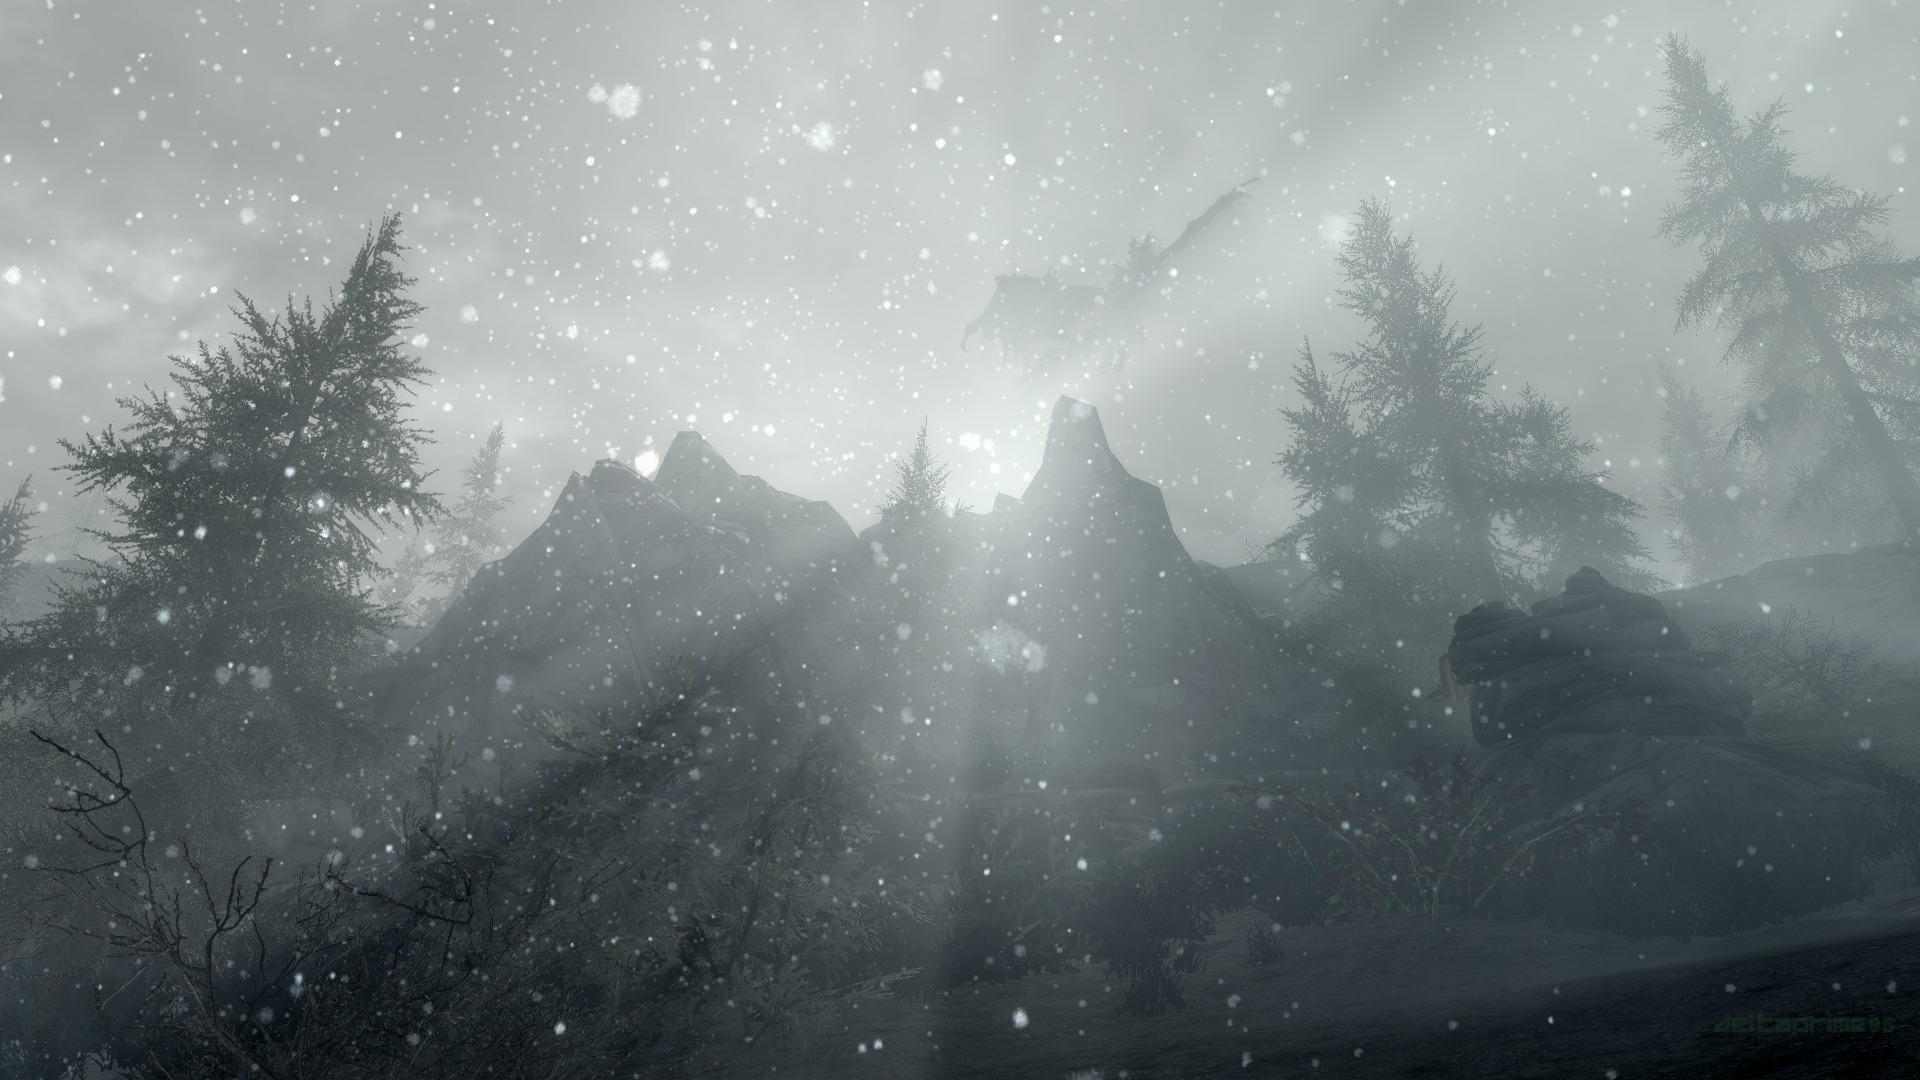 General 1920x1080 Skyrim Remastered The Elder Scrolls V: Skyrim Alduin dragon snowstorm snow sun rays mountains PC gaming